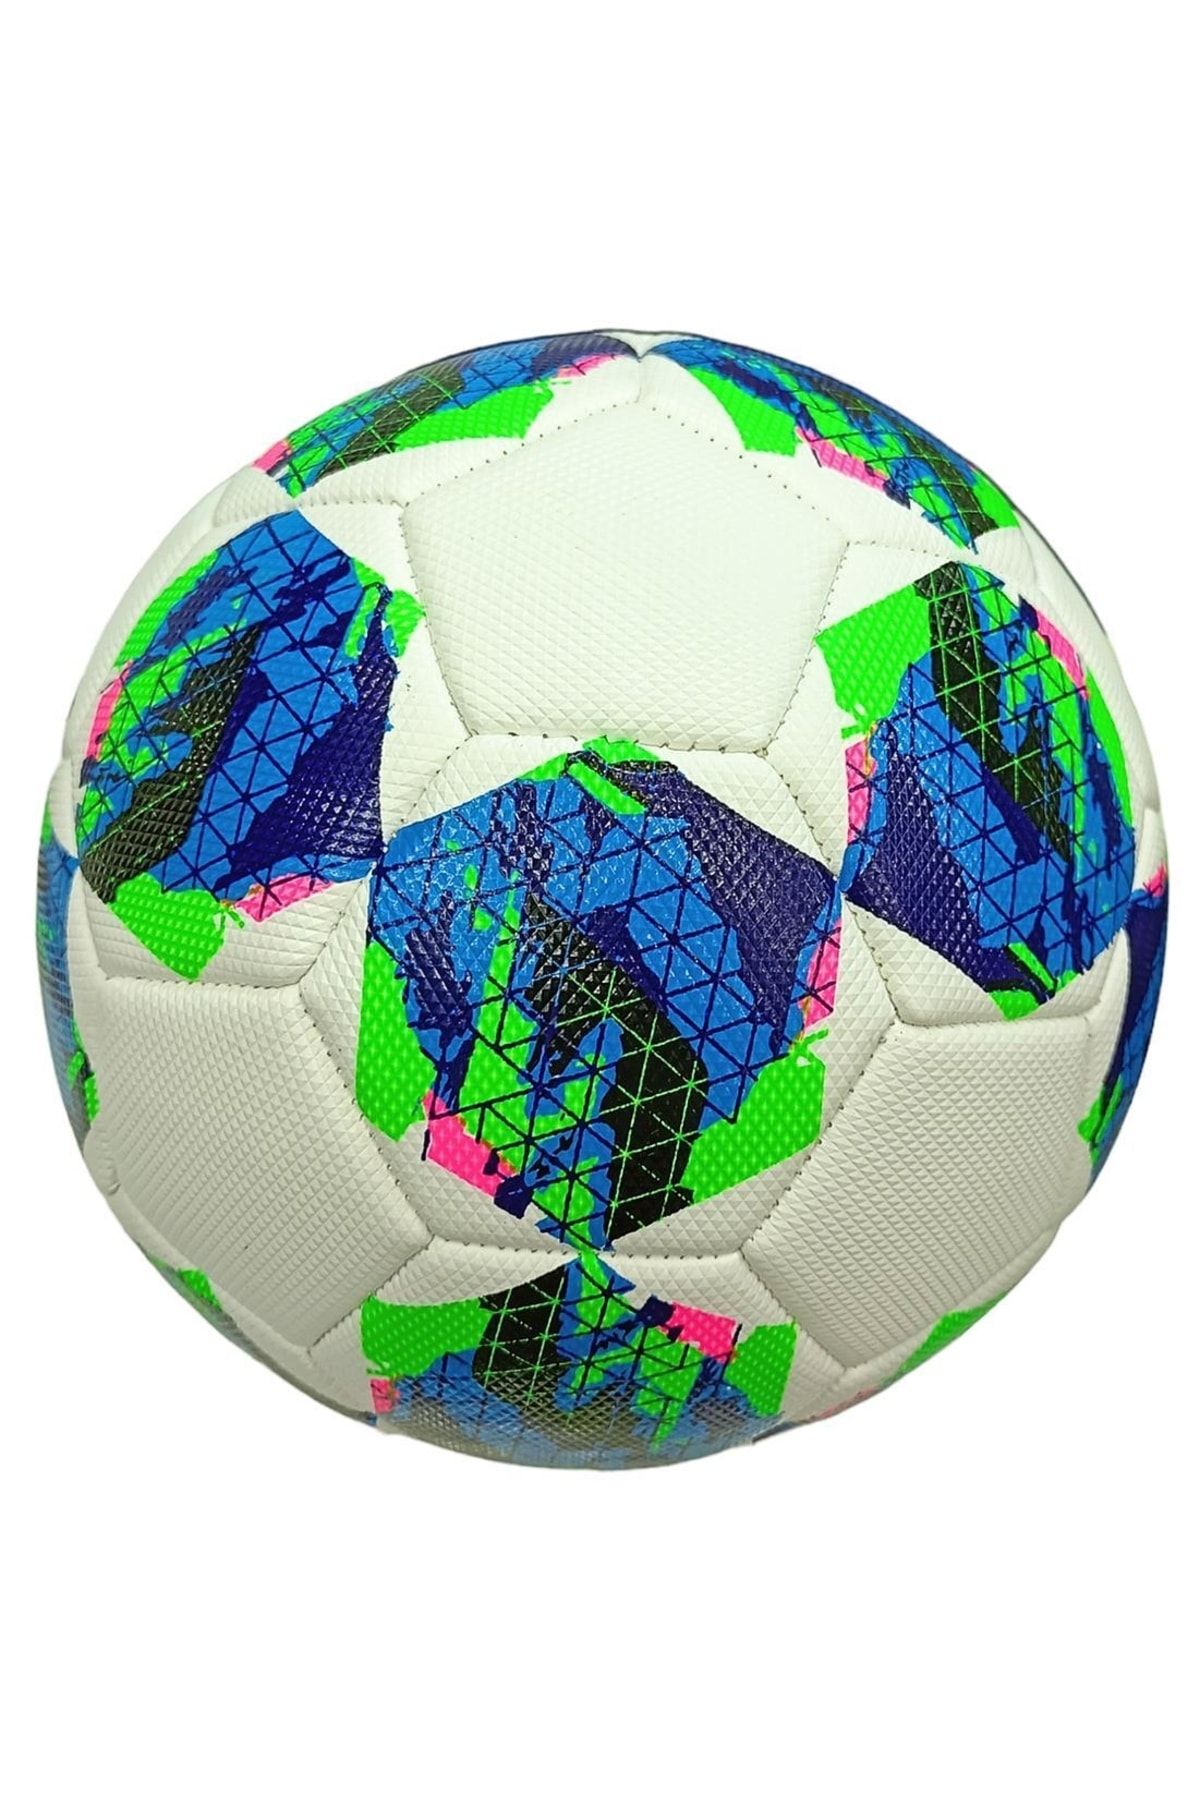 Avessa 4 Astar Futbol Topu Mavi Yeşil B-200 400 Gr